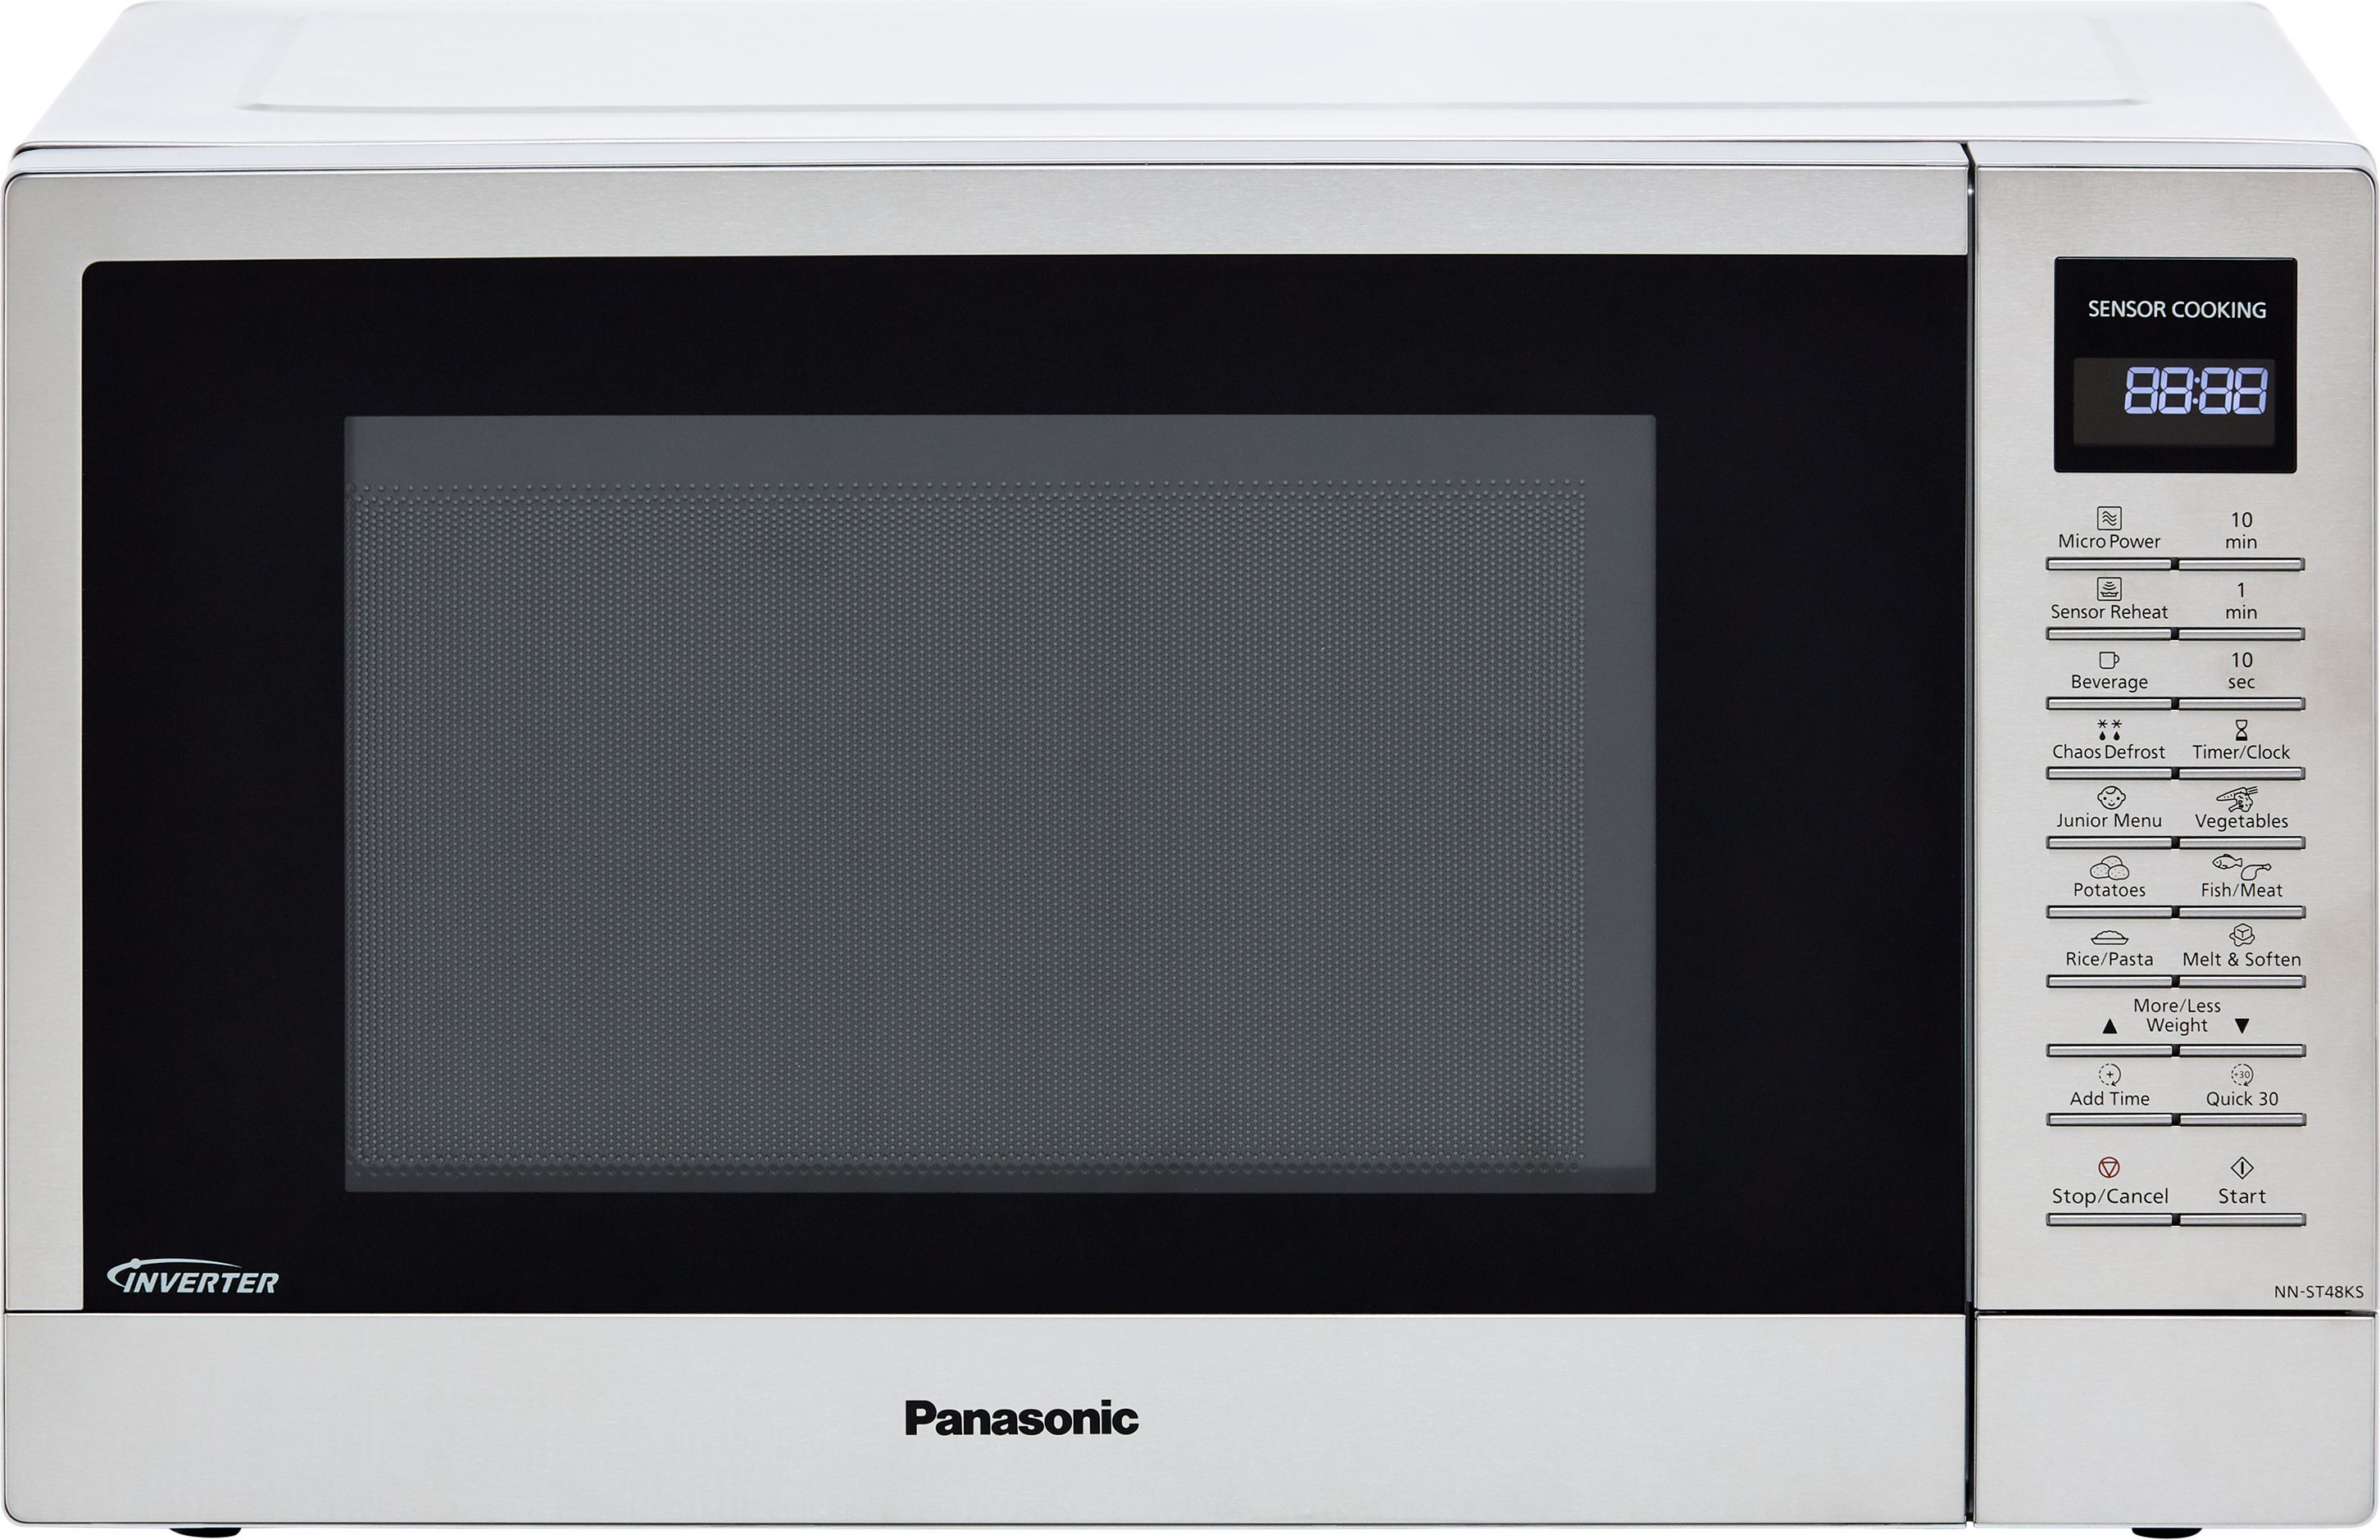 Panasonic NN-ST48KSBPQ 31cm tall, 52cm wide, Freestanding Microwave - Stainless Steel, Stainless Steel